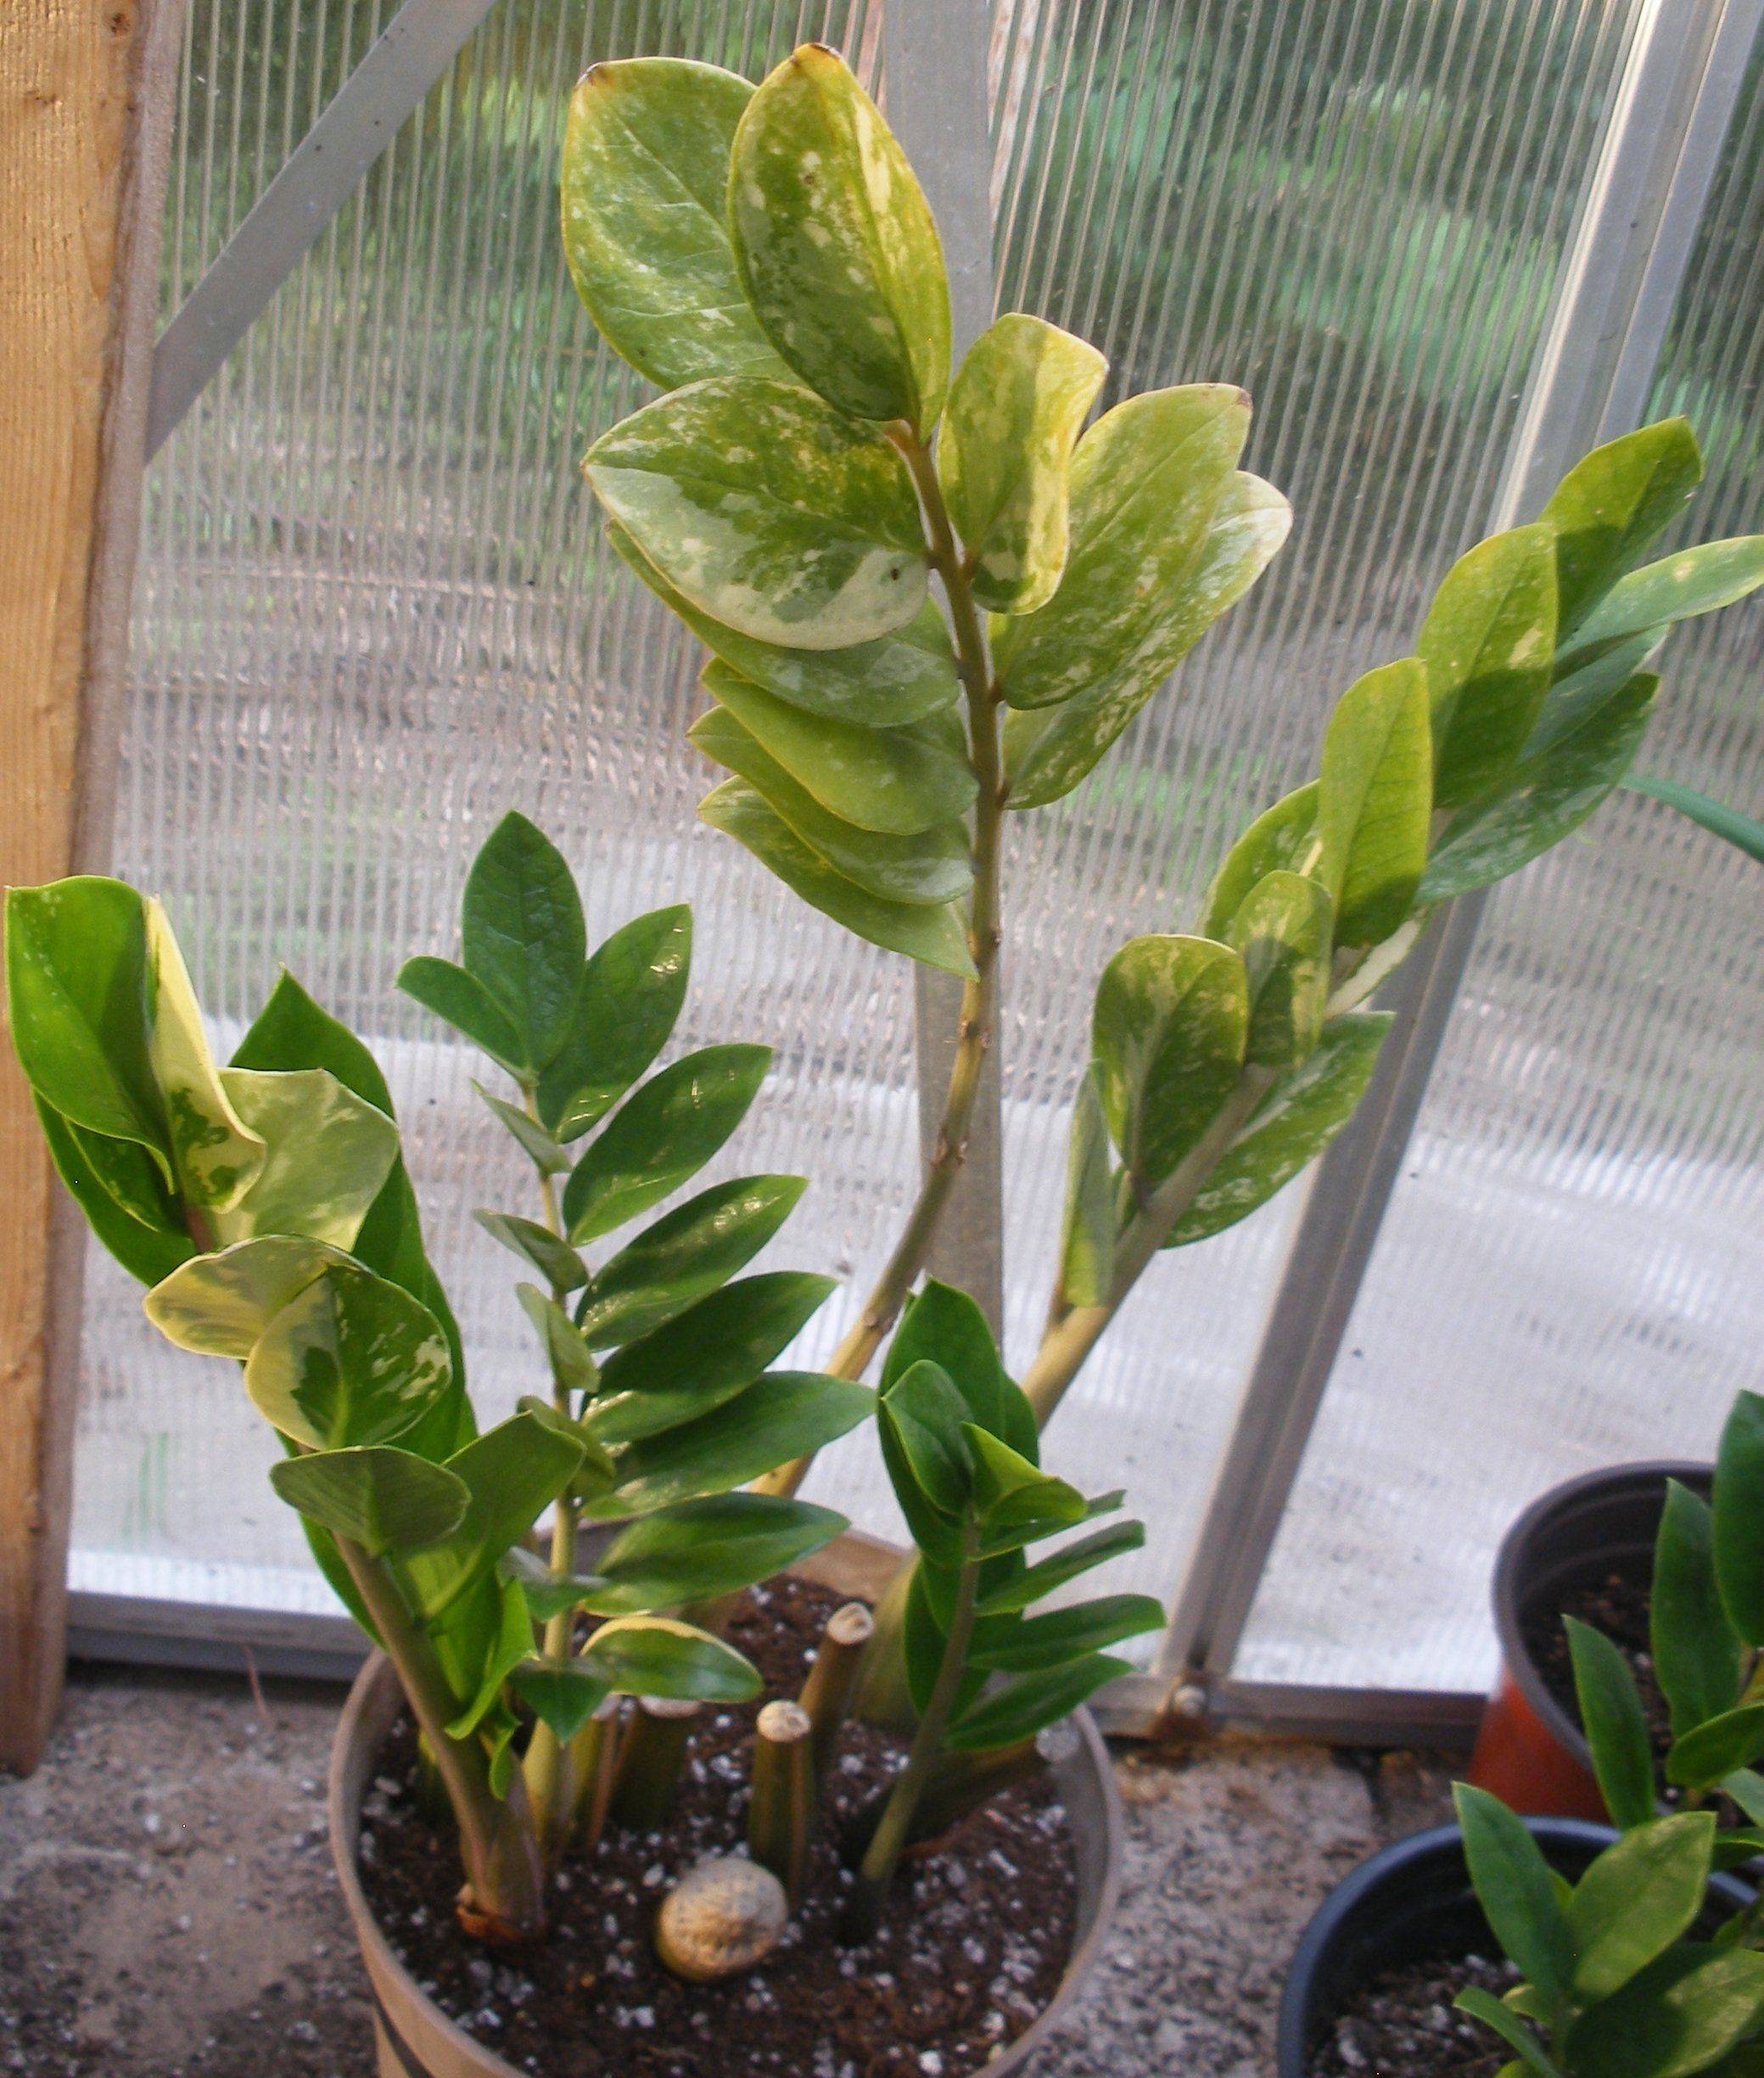 Замиокулькас (долларовое дерево): уход в домашних условиях, фото комнатного цветка